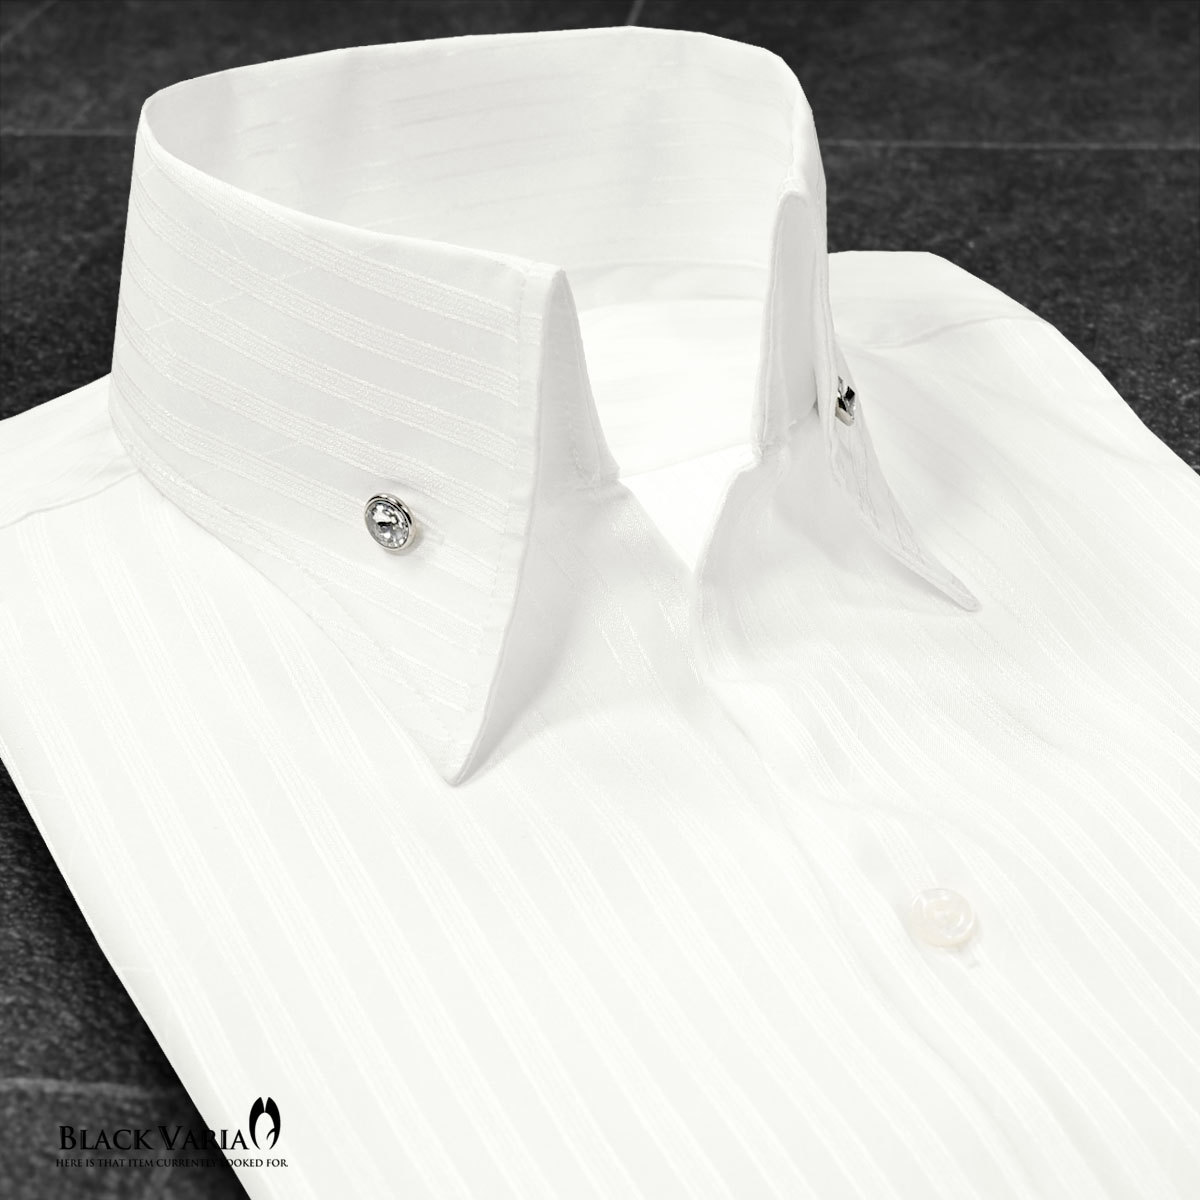 191852-wh BLACK VARIA ジャガードストライプ スキッパー クリスタルボタン ドレスシャツ メンズ(ホワイト白) L 結婚式 二次会 細身_画像1